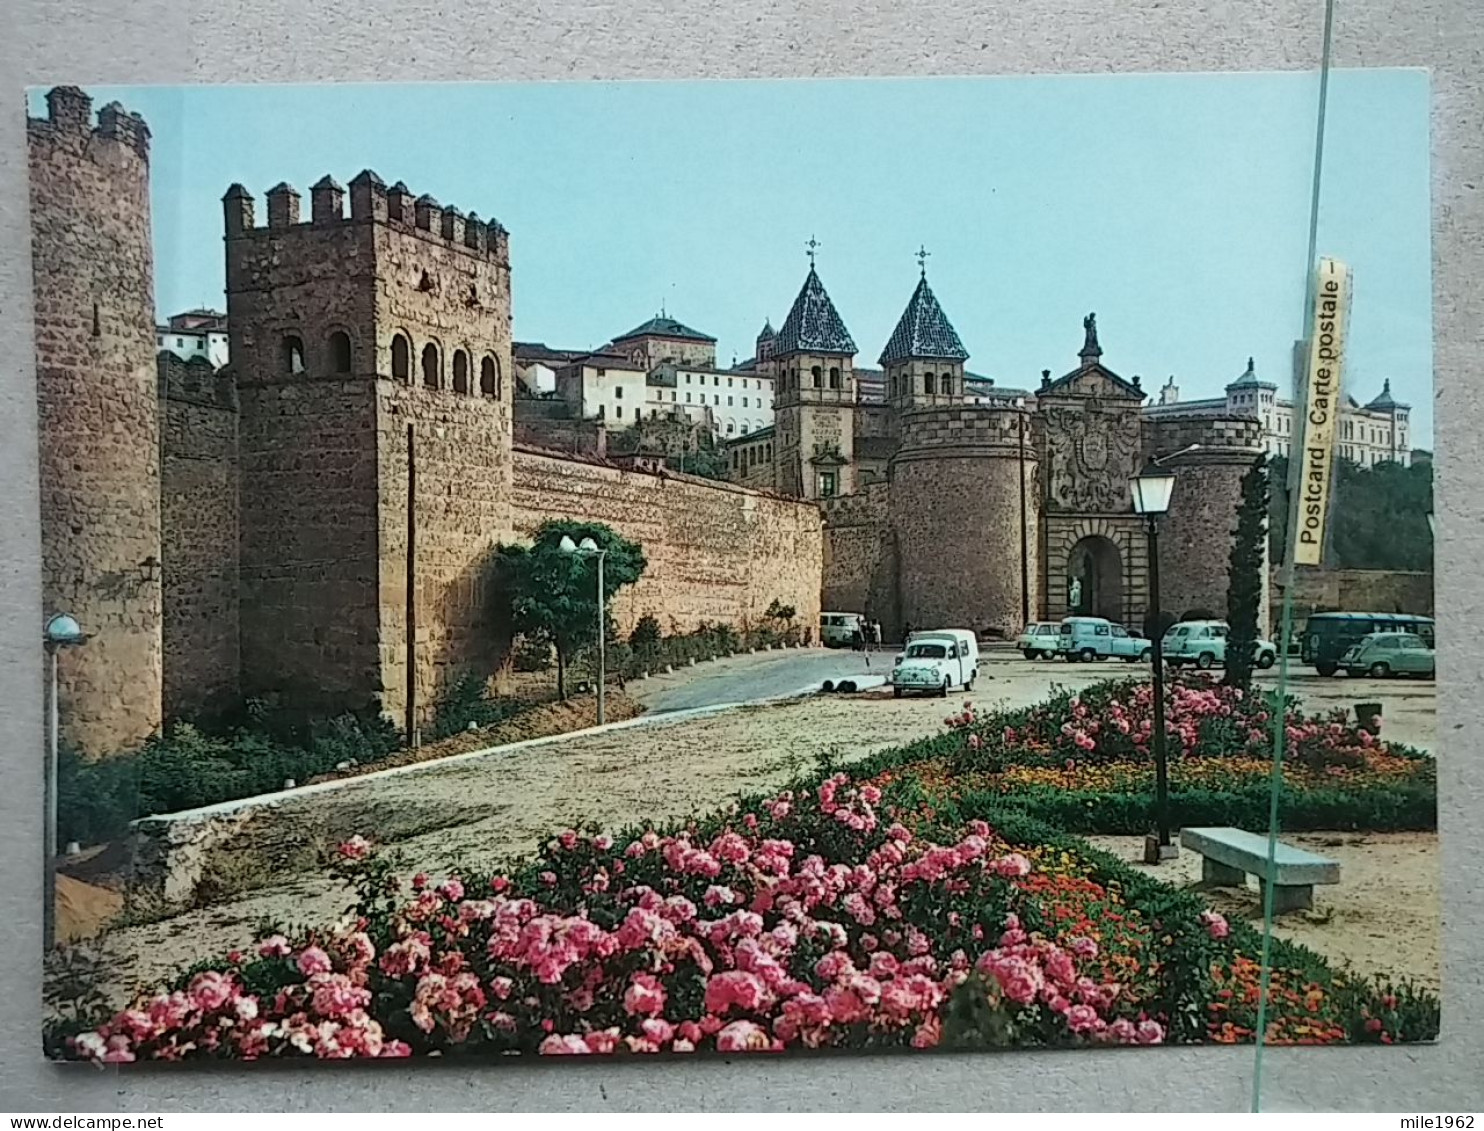 KOV 781-2 - TOLEDO, SPAIN - Toledo